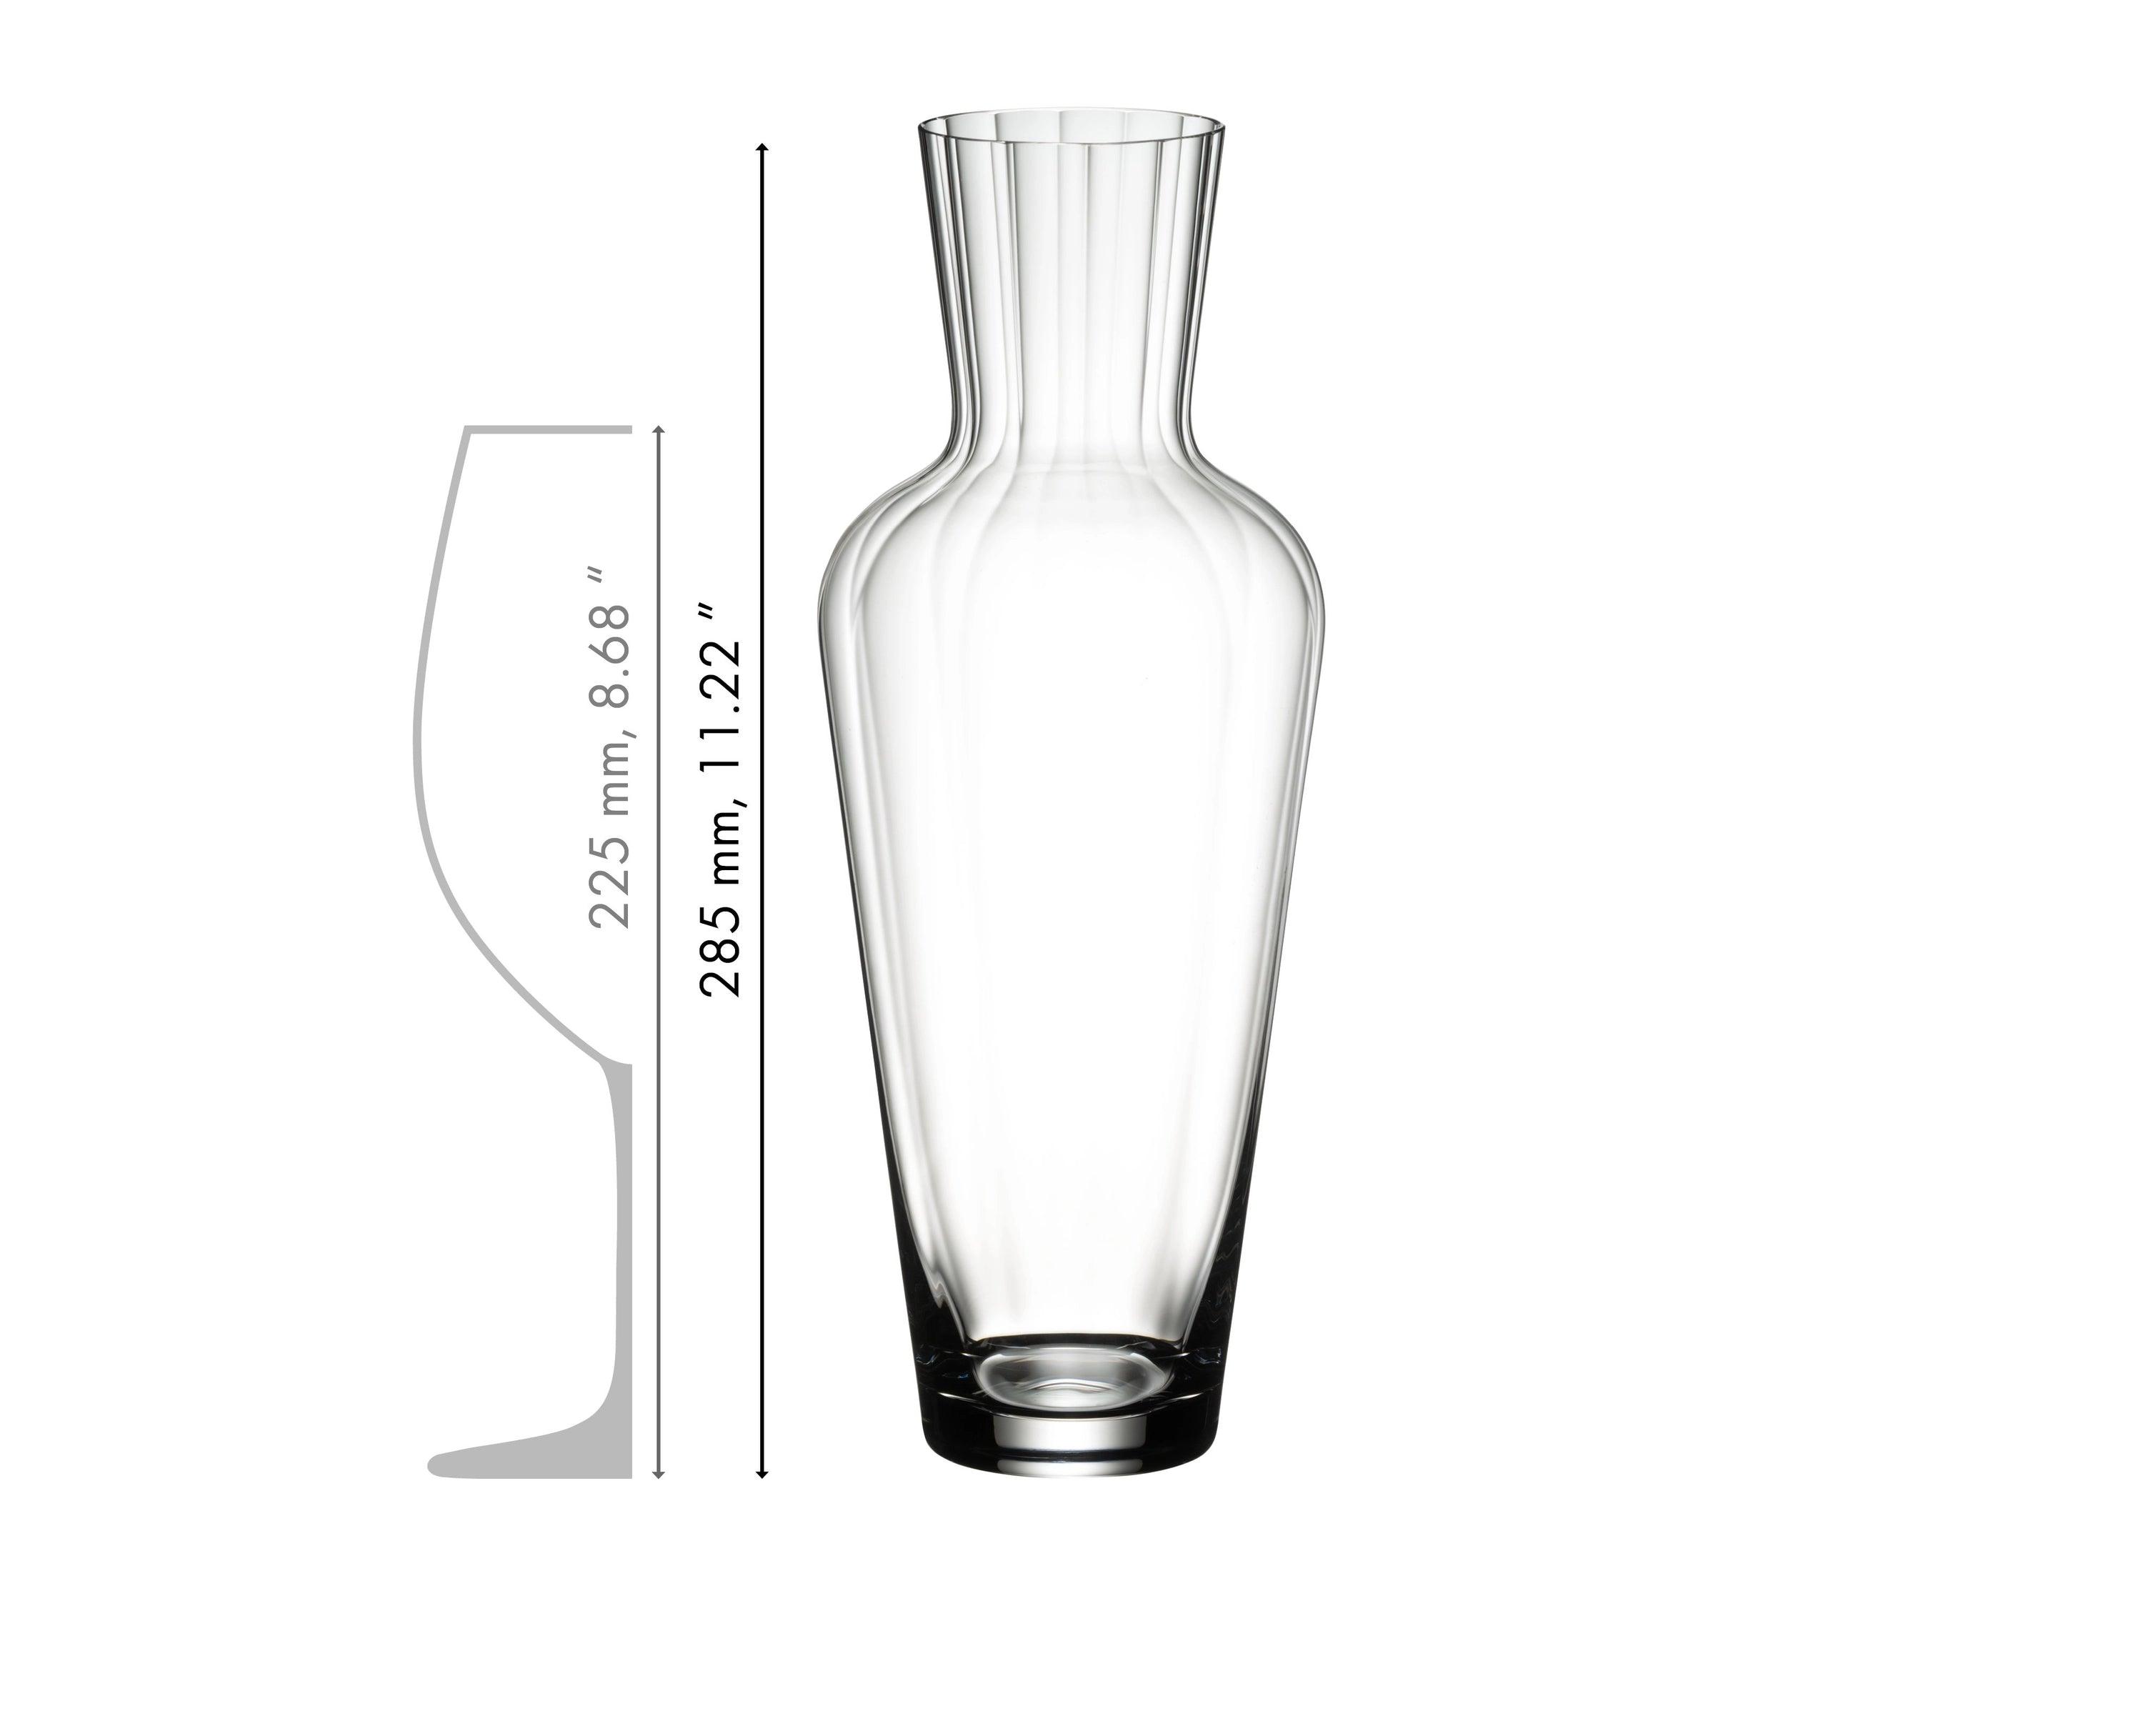 Riedel Veritas Cabernet / Merlot Glasses and Mosel Decanter